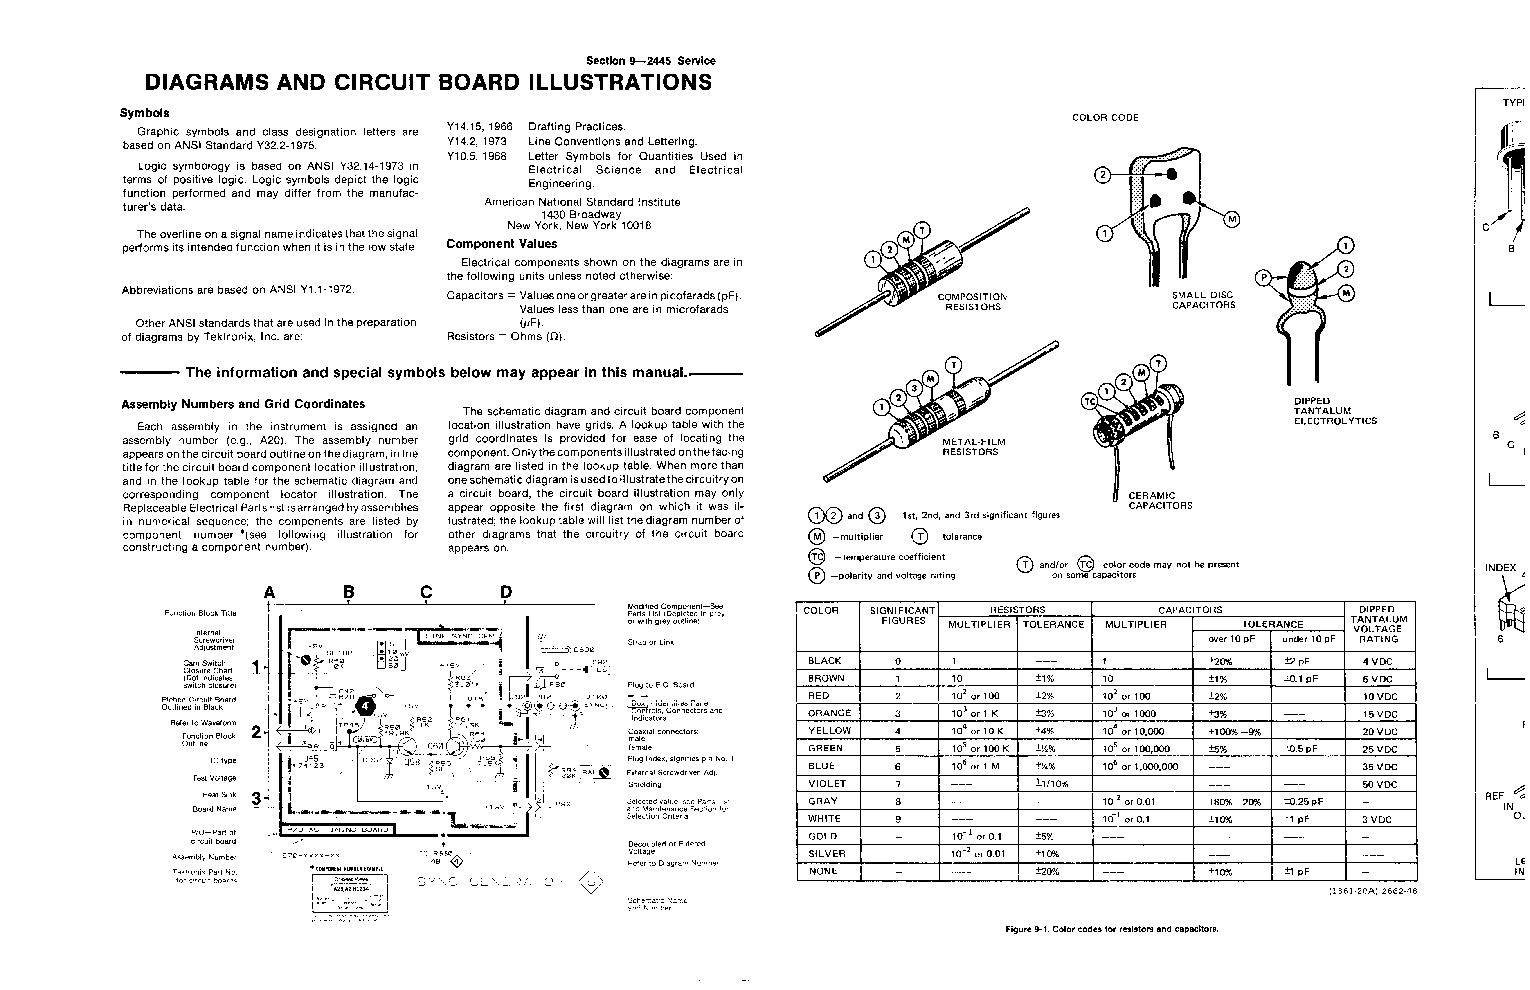 TEKTRONIX 2445 SCH service manual (1st page)